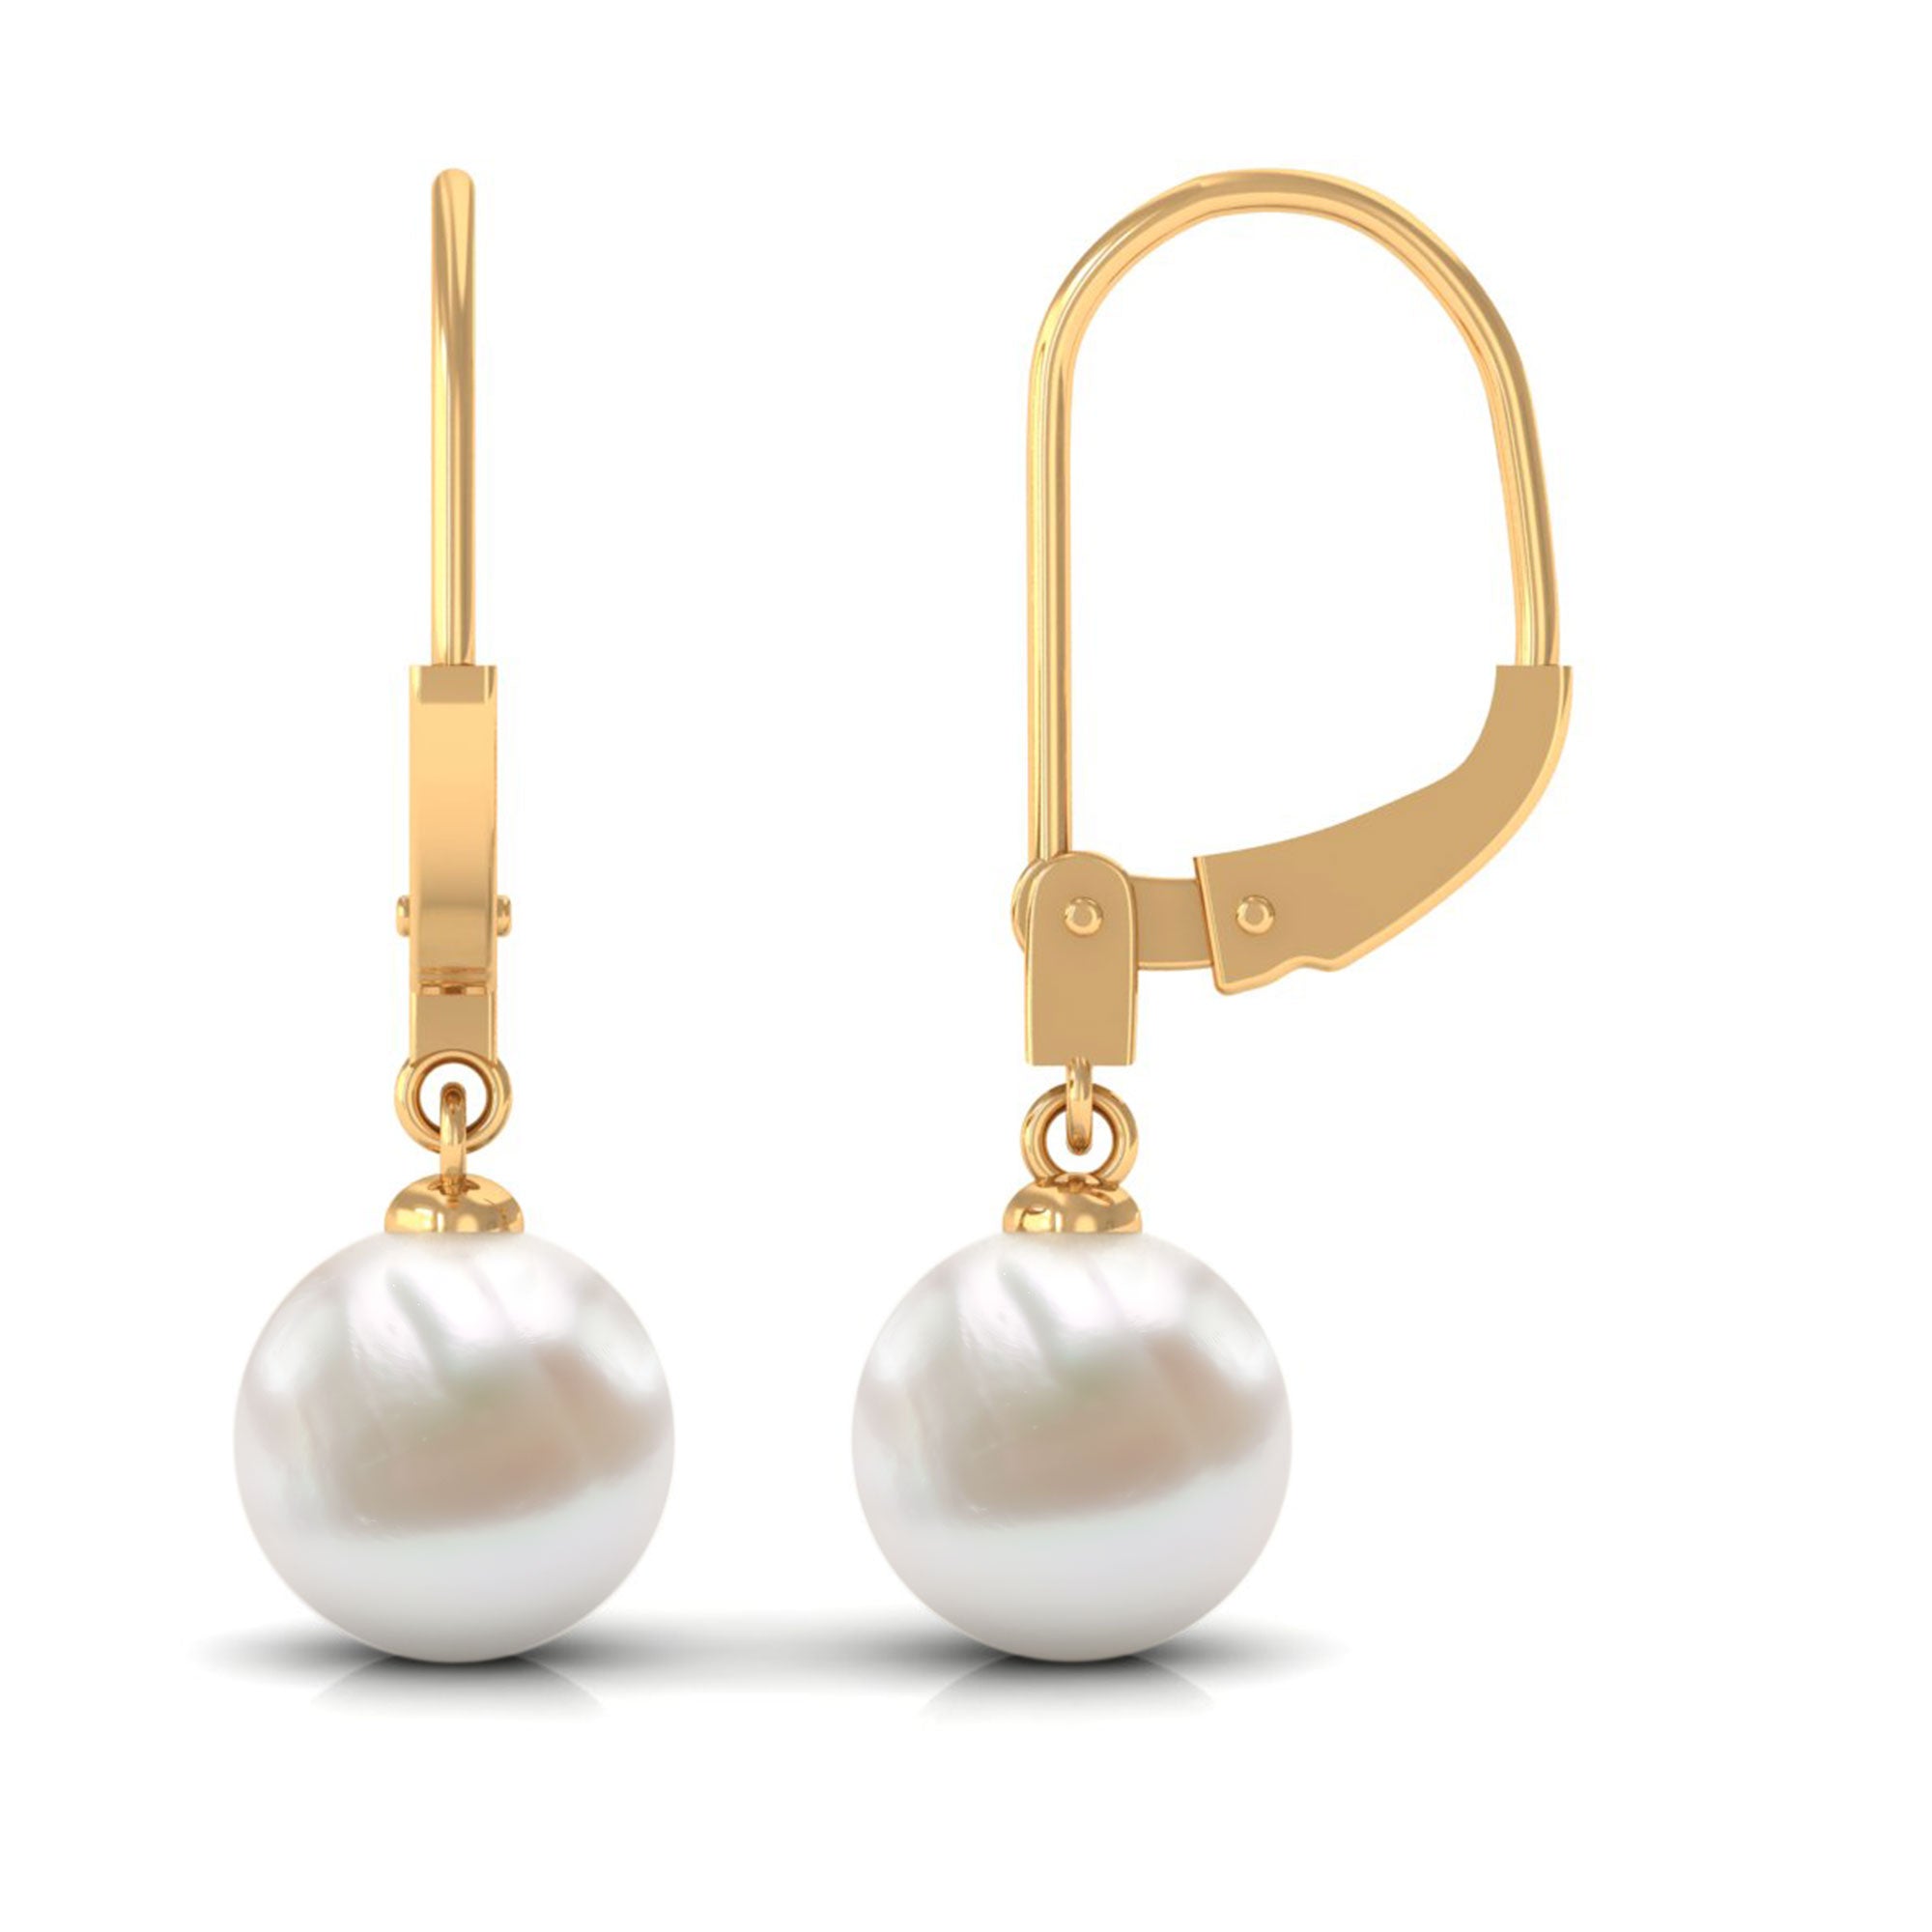 Arisha Jewels-White Pearl Drop Earrings with Lever Back Closure